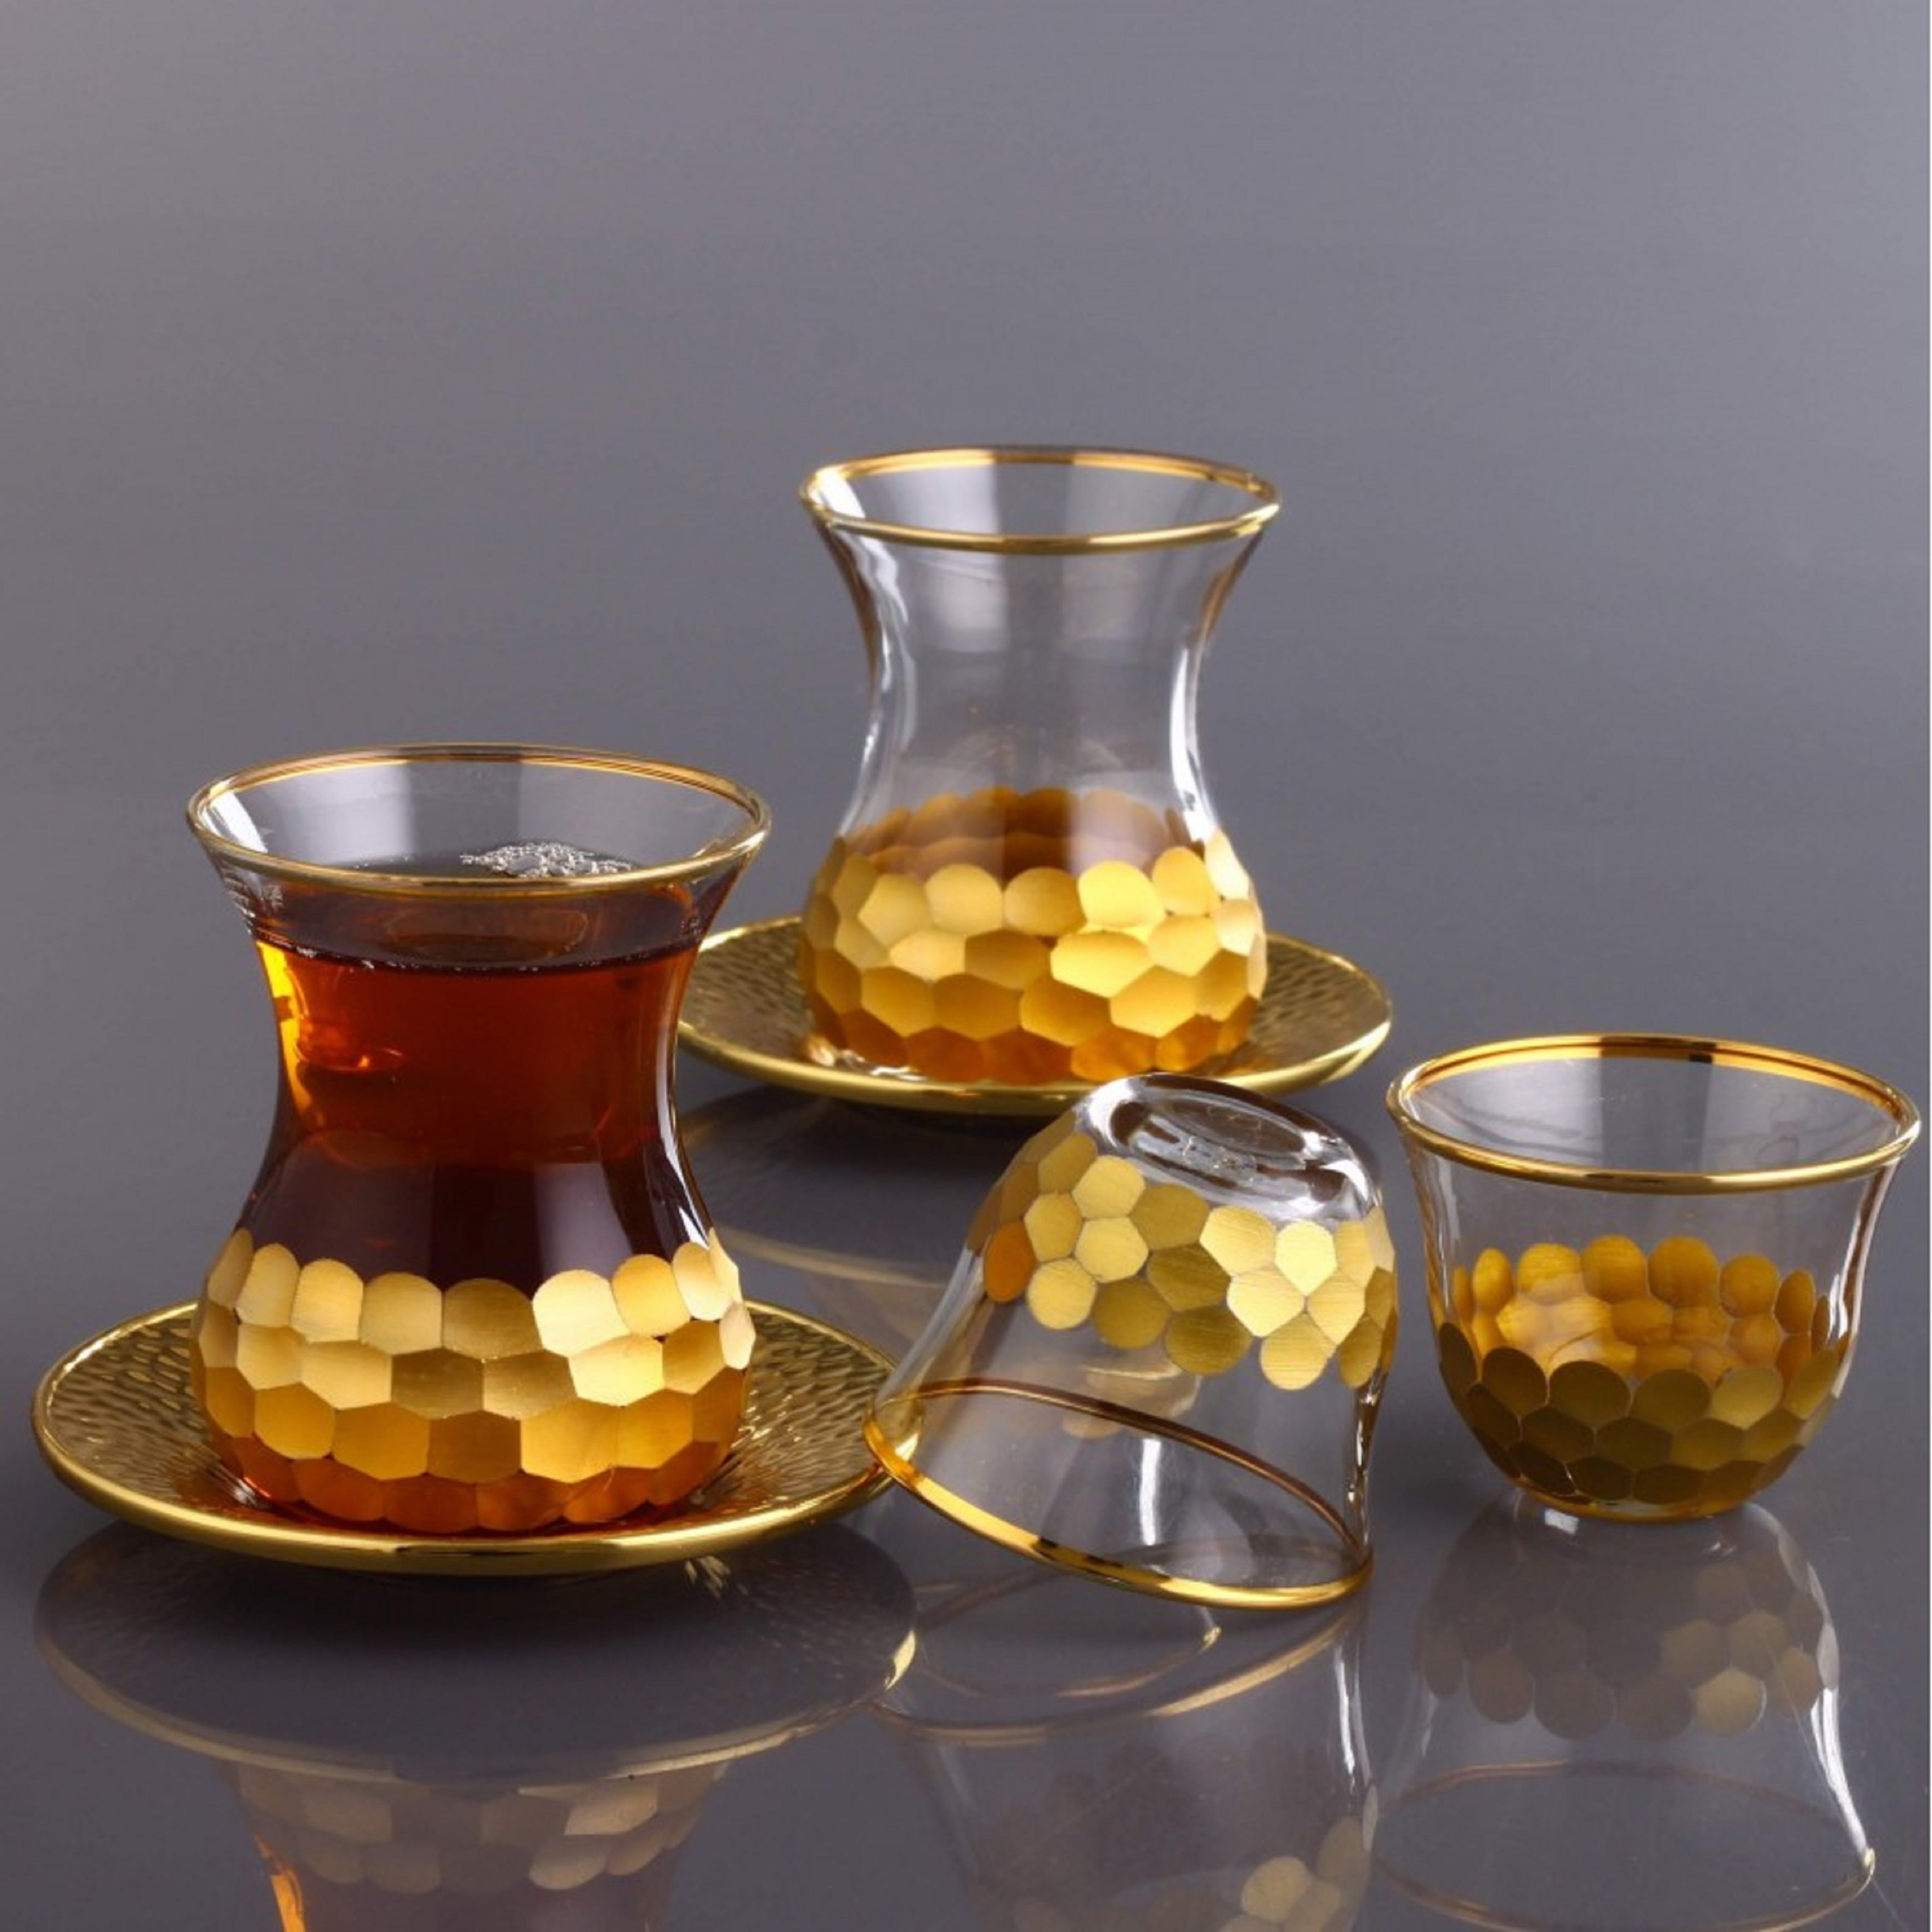 Eparé 6 oz Double-Wall Turkish Tea Cup (Set of 2)